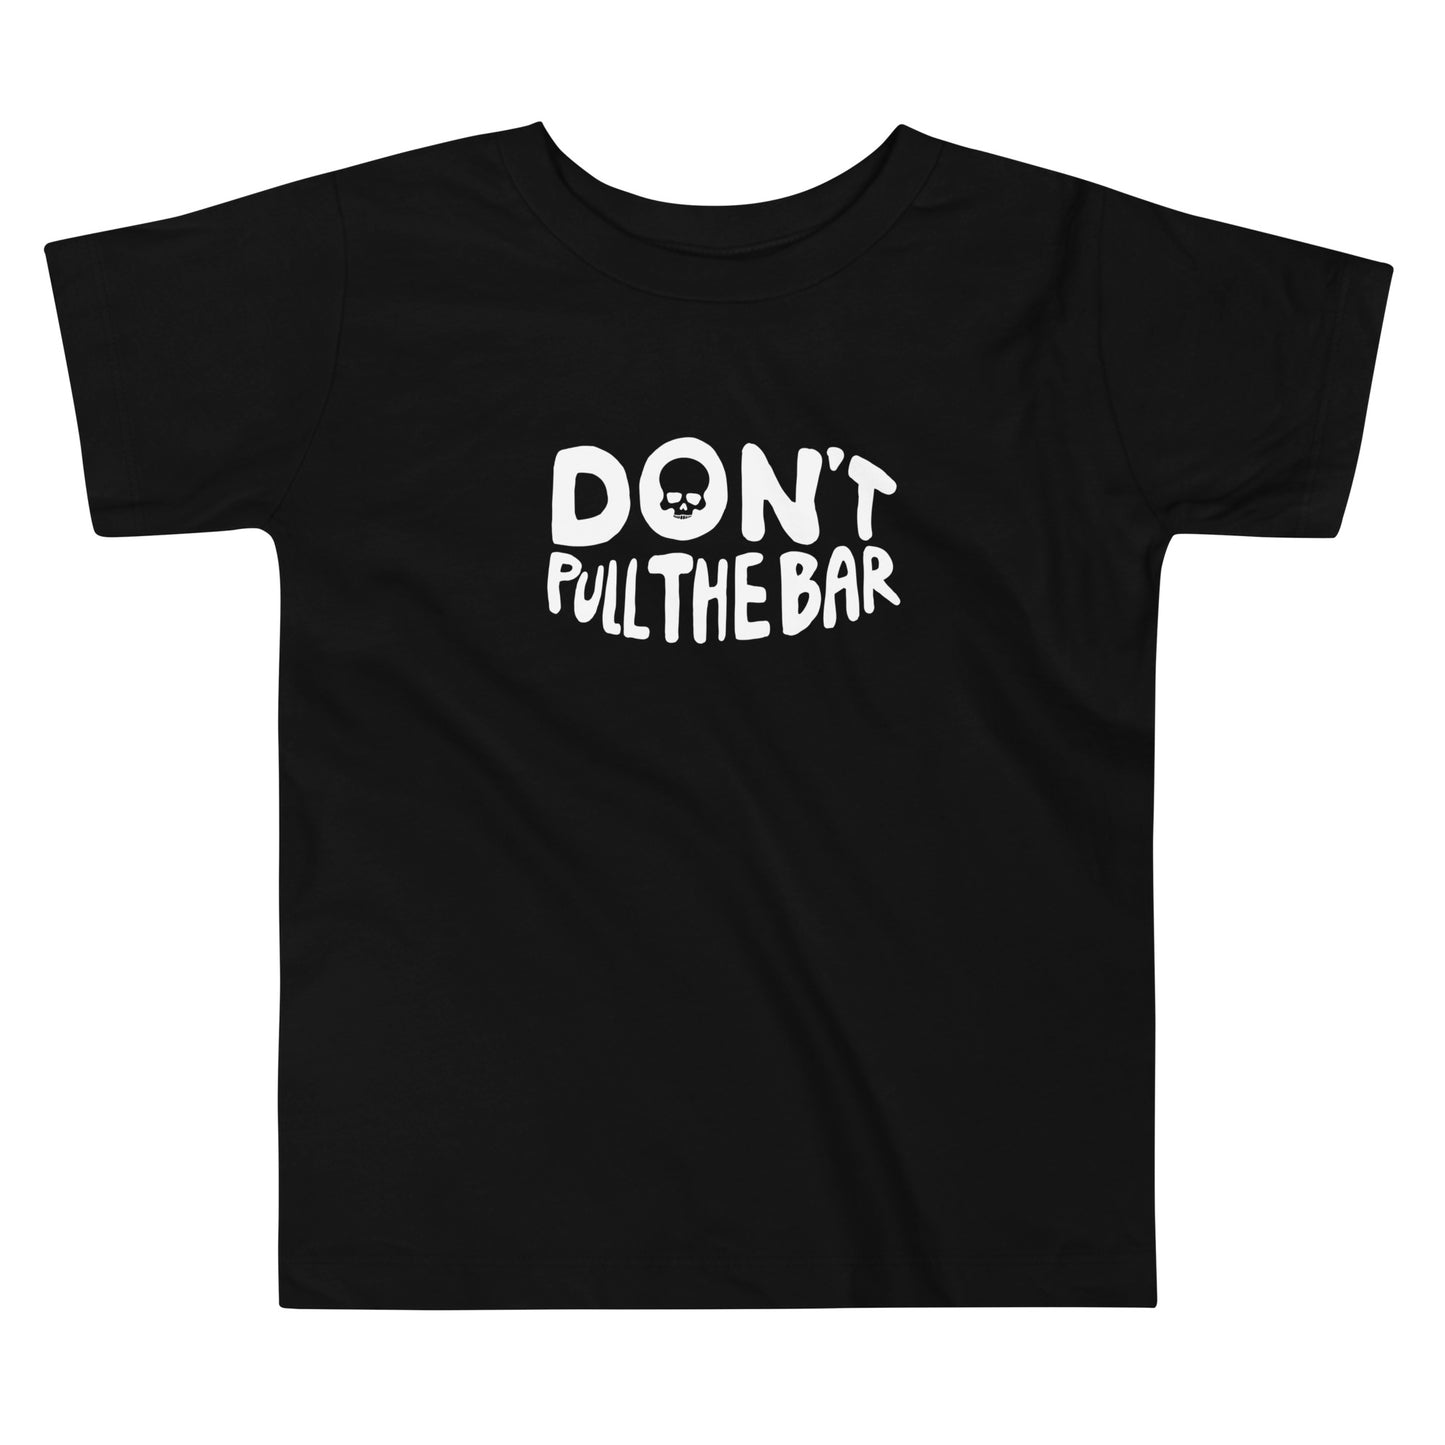 Premium Cotton Kiter's Kids T-shirt